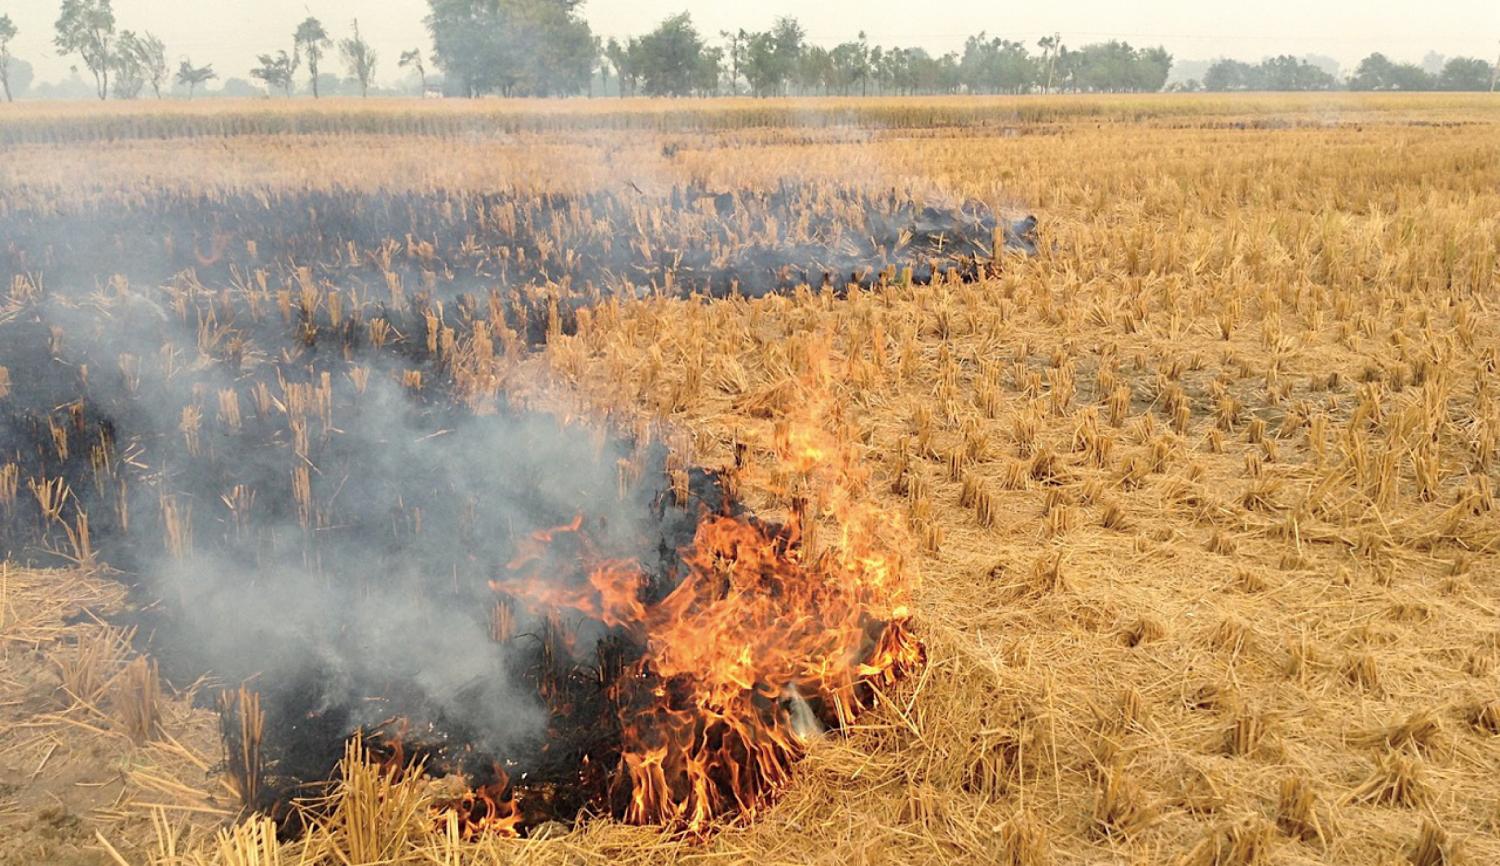 Photo 1: Representational image of rice straw burning in Punjab (by S. Hayashida, 04/11/2018)